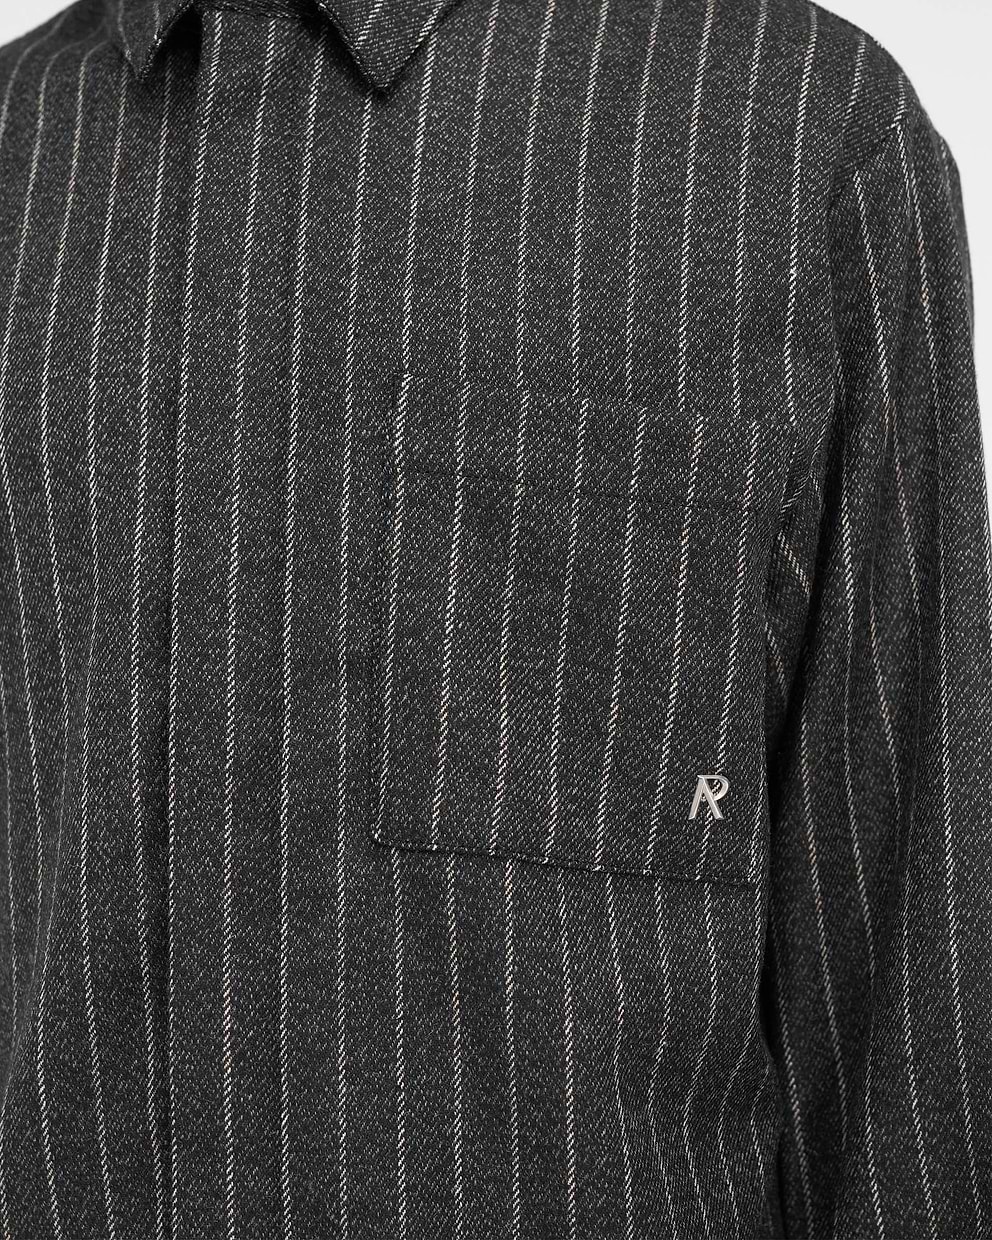 Cropped Dress Shirt - Black Pinstripe